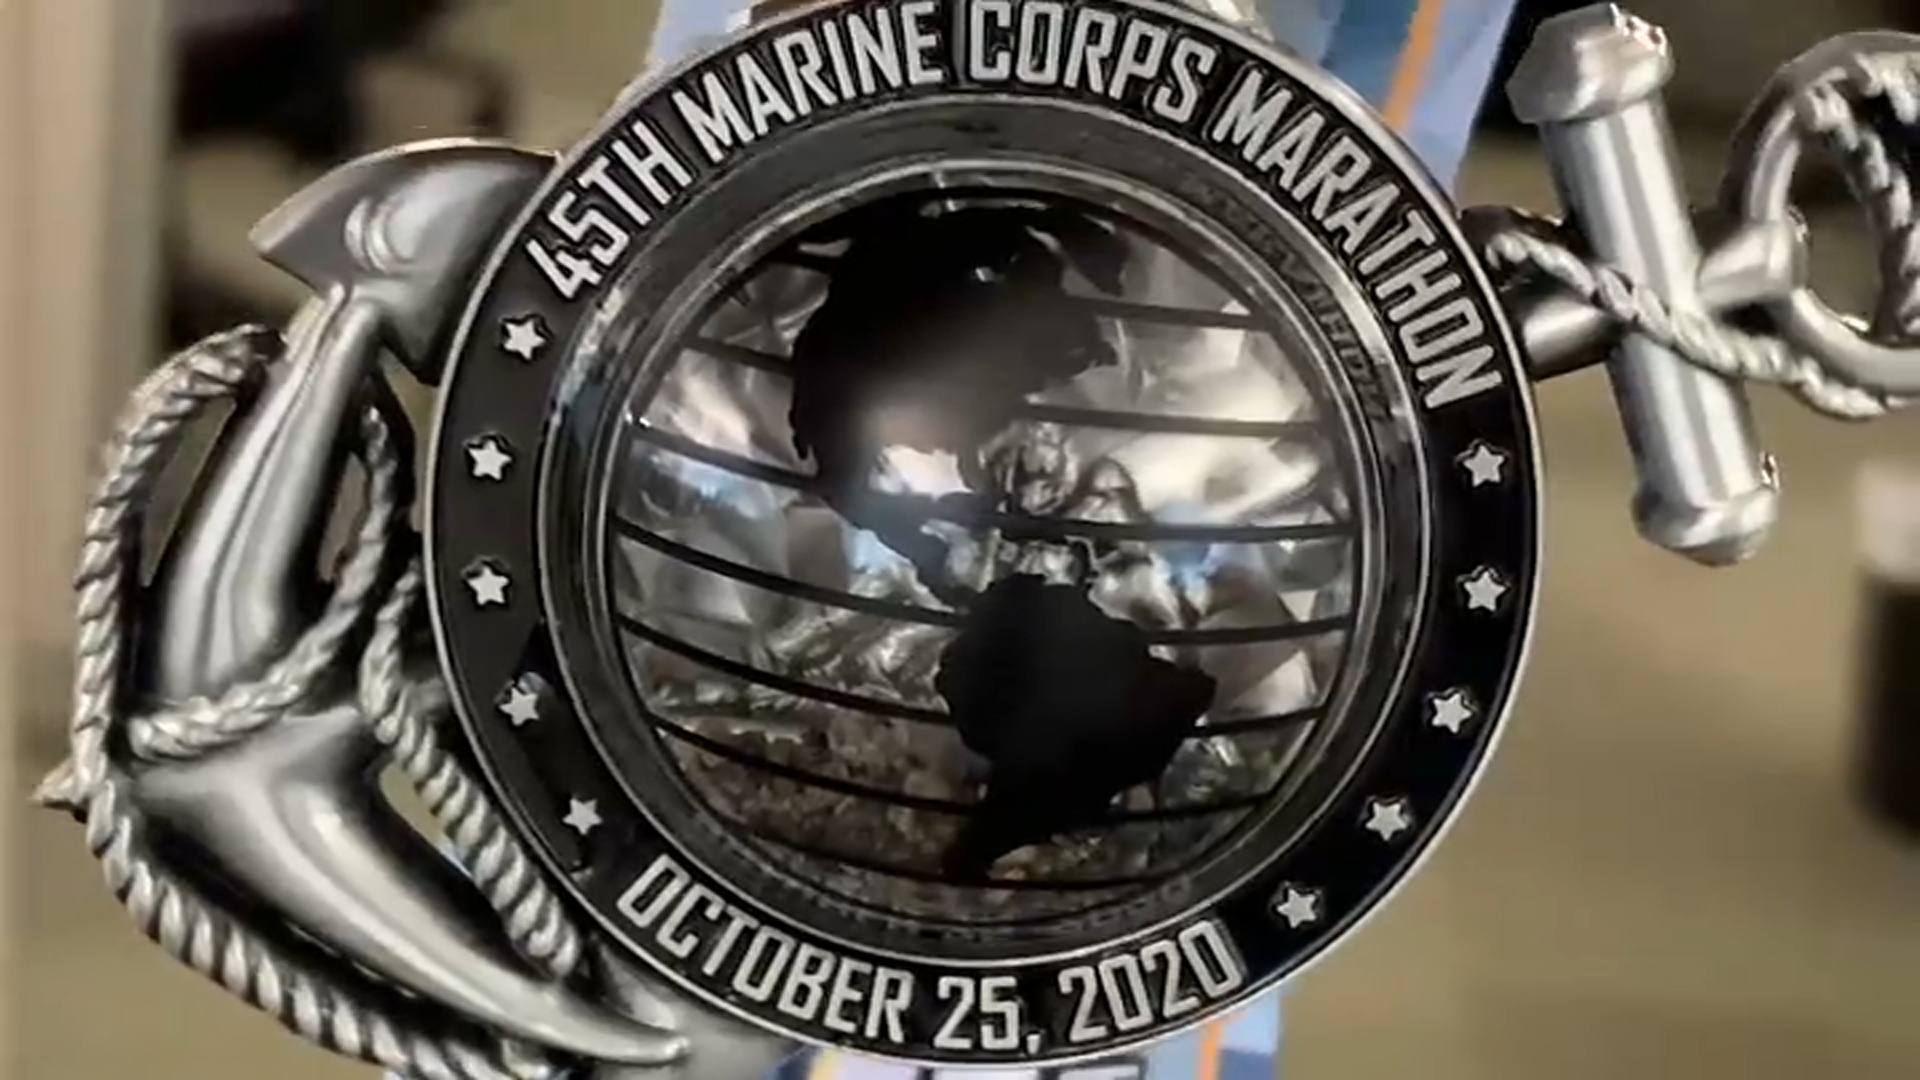 download marine corps marathon 2022 photos